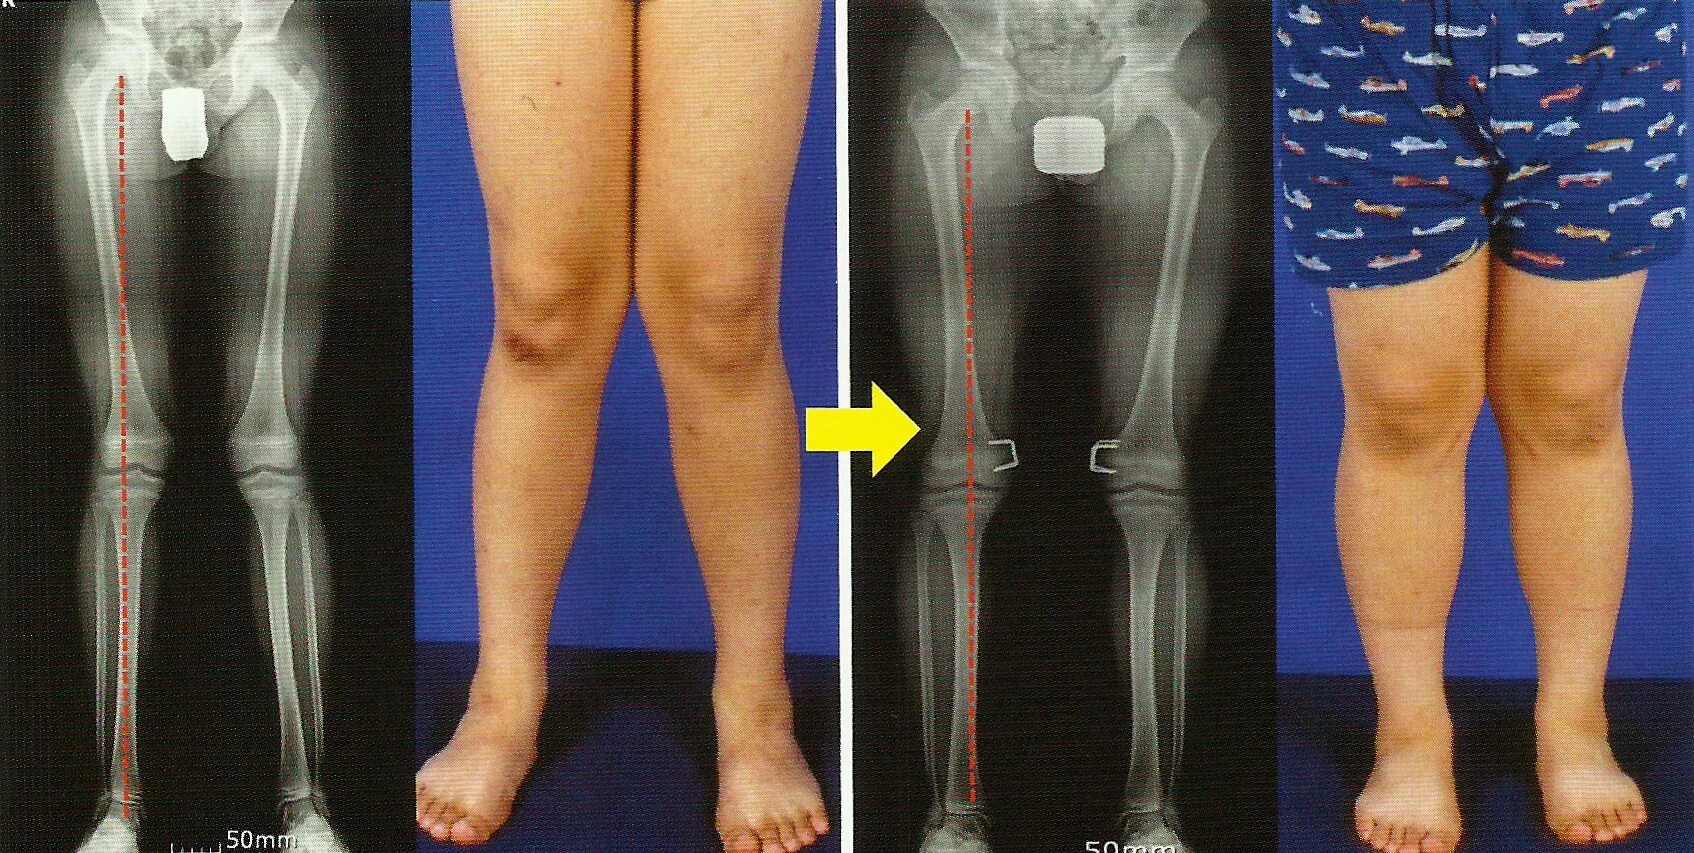 Вальгусная и варусная деформация. Вальгус коленных суставов. Варусная дисплазия коленных суставов. Варусная и вальгусная деформация коленного сустава. Болезнь суставов у взрослых